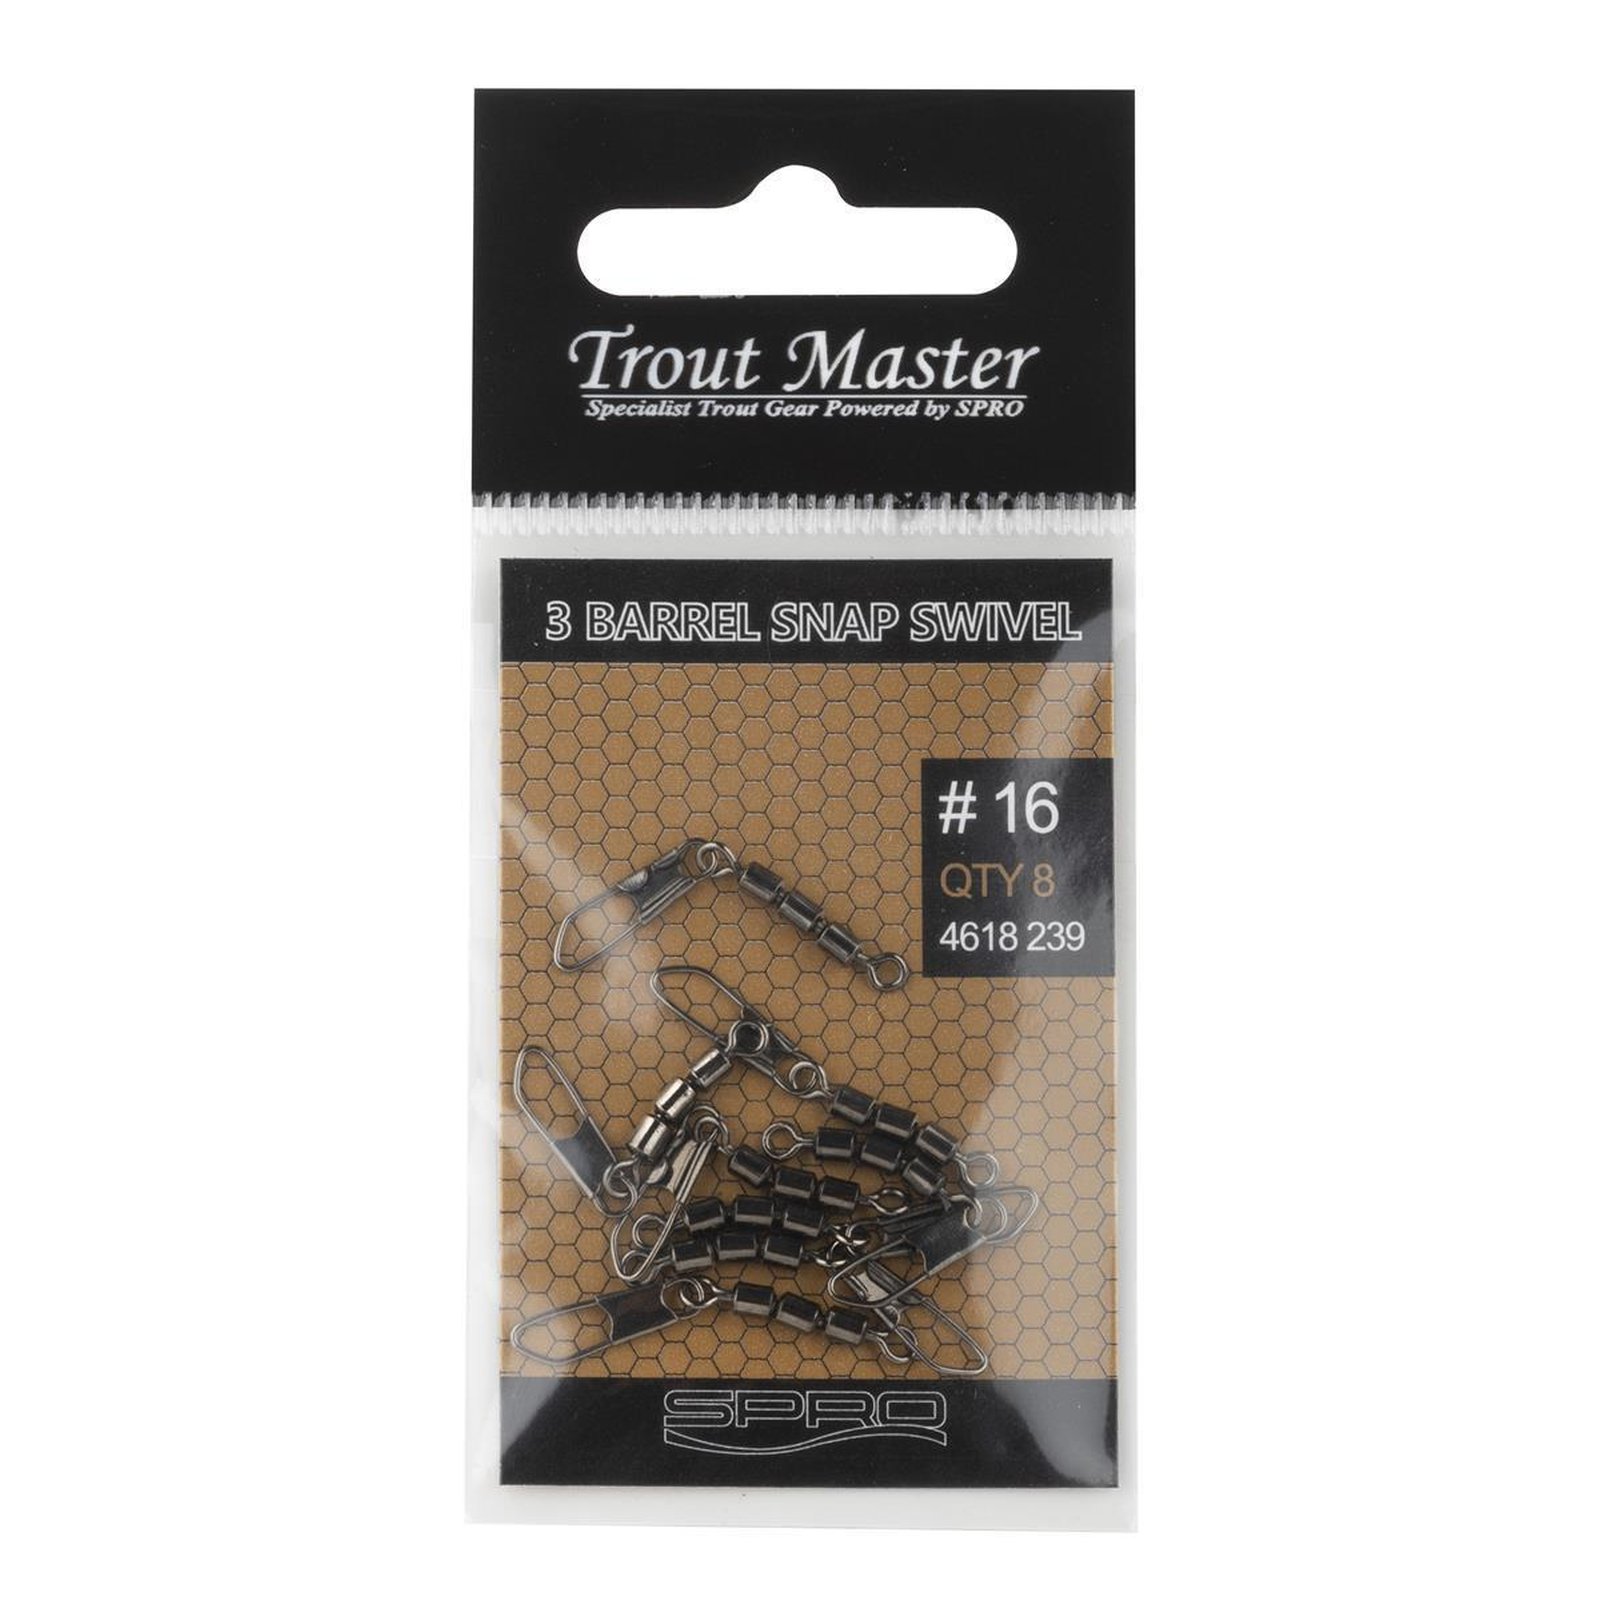 Trout Master 3 Barrel Snap Swivel #20